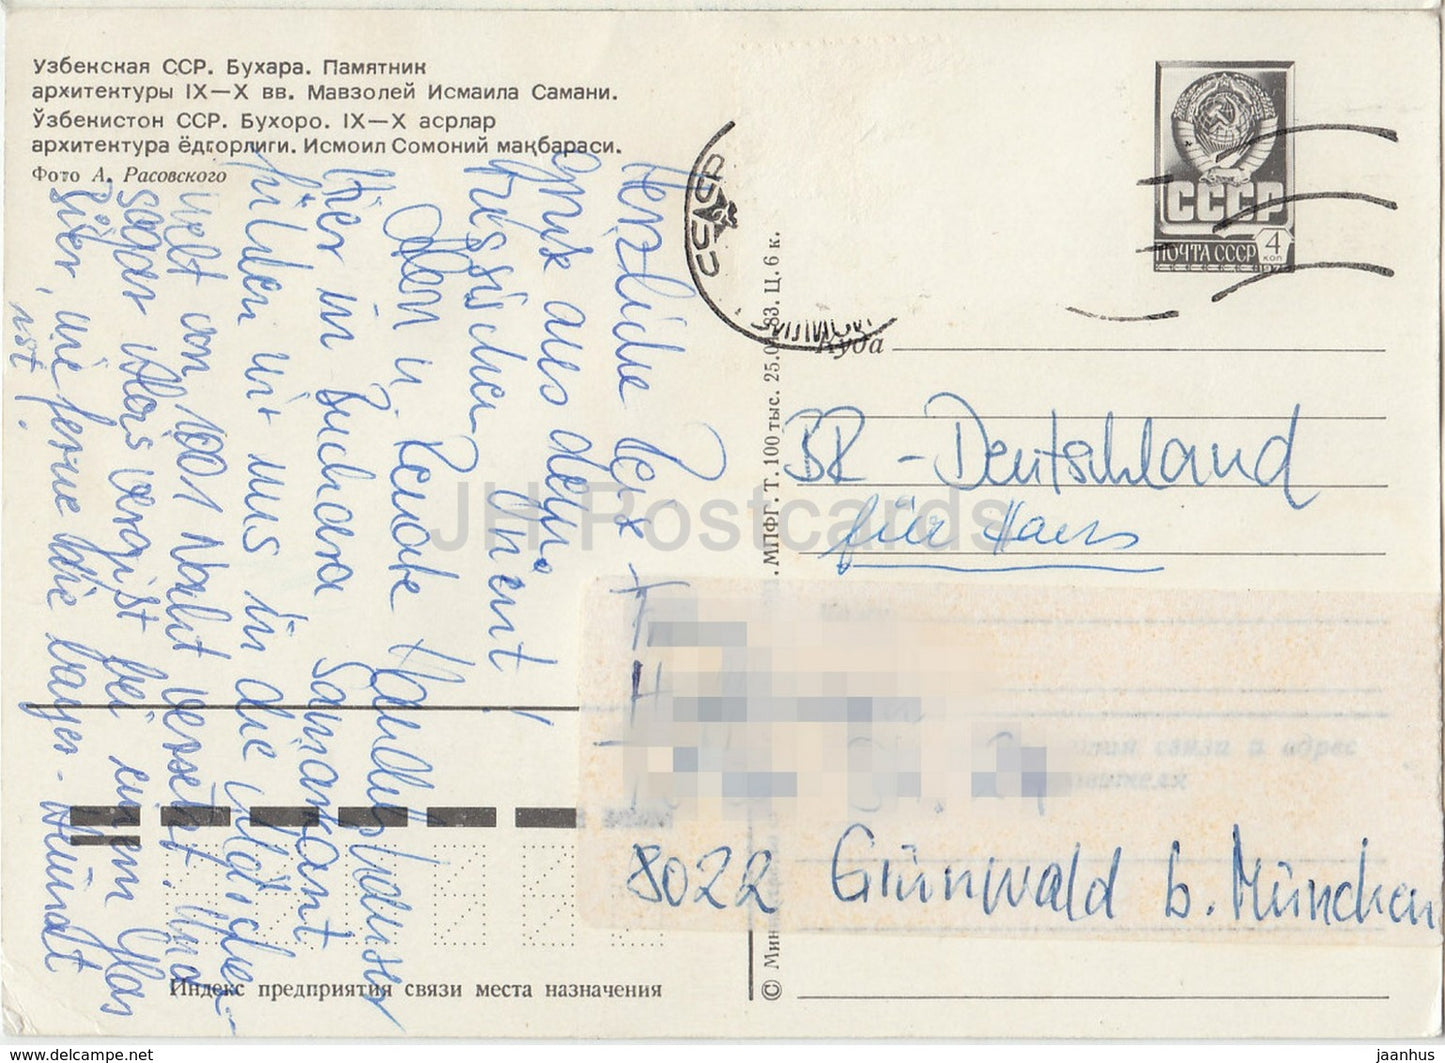 Boukhara - Mausolée Ismail Samani - entier postal - 1983 - Arménie URSS - utilisé